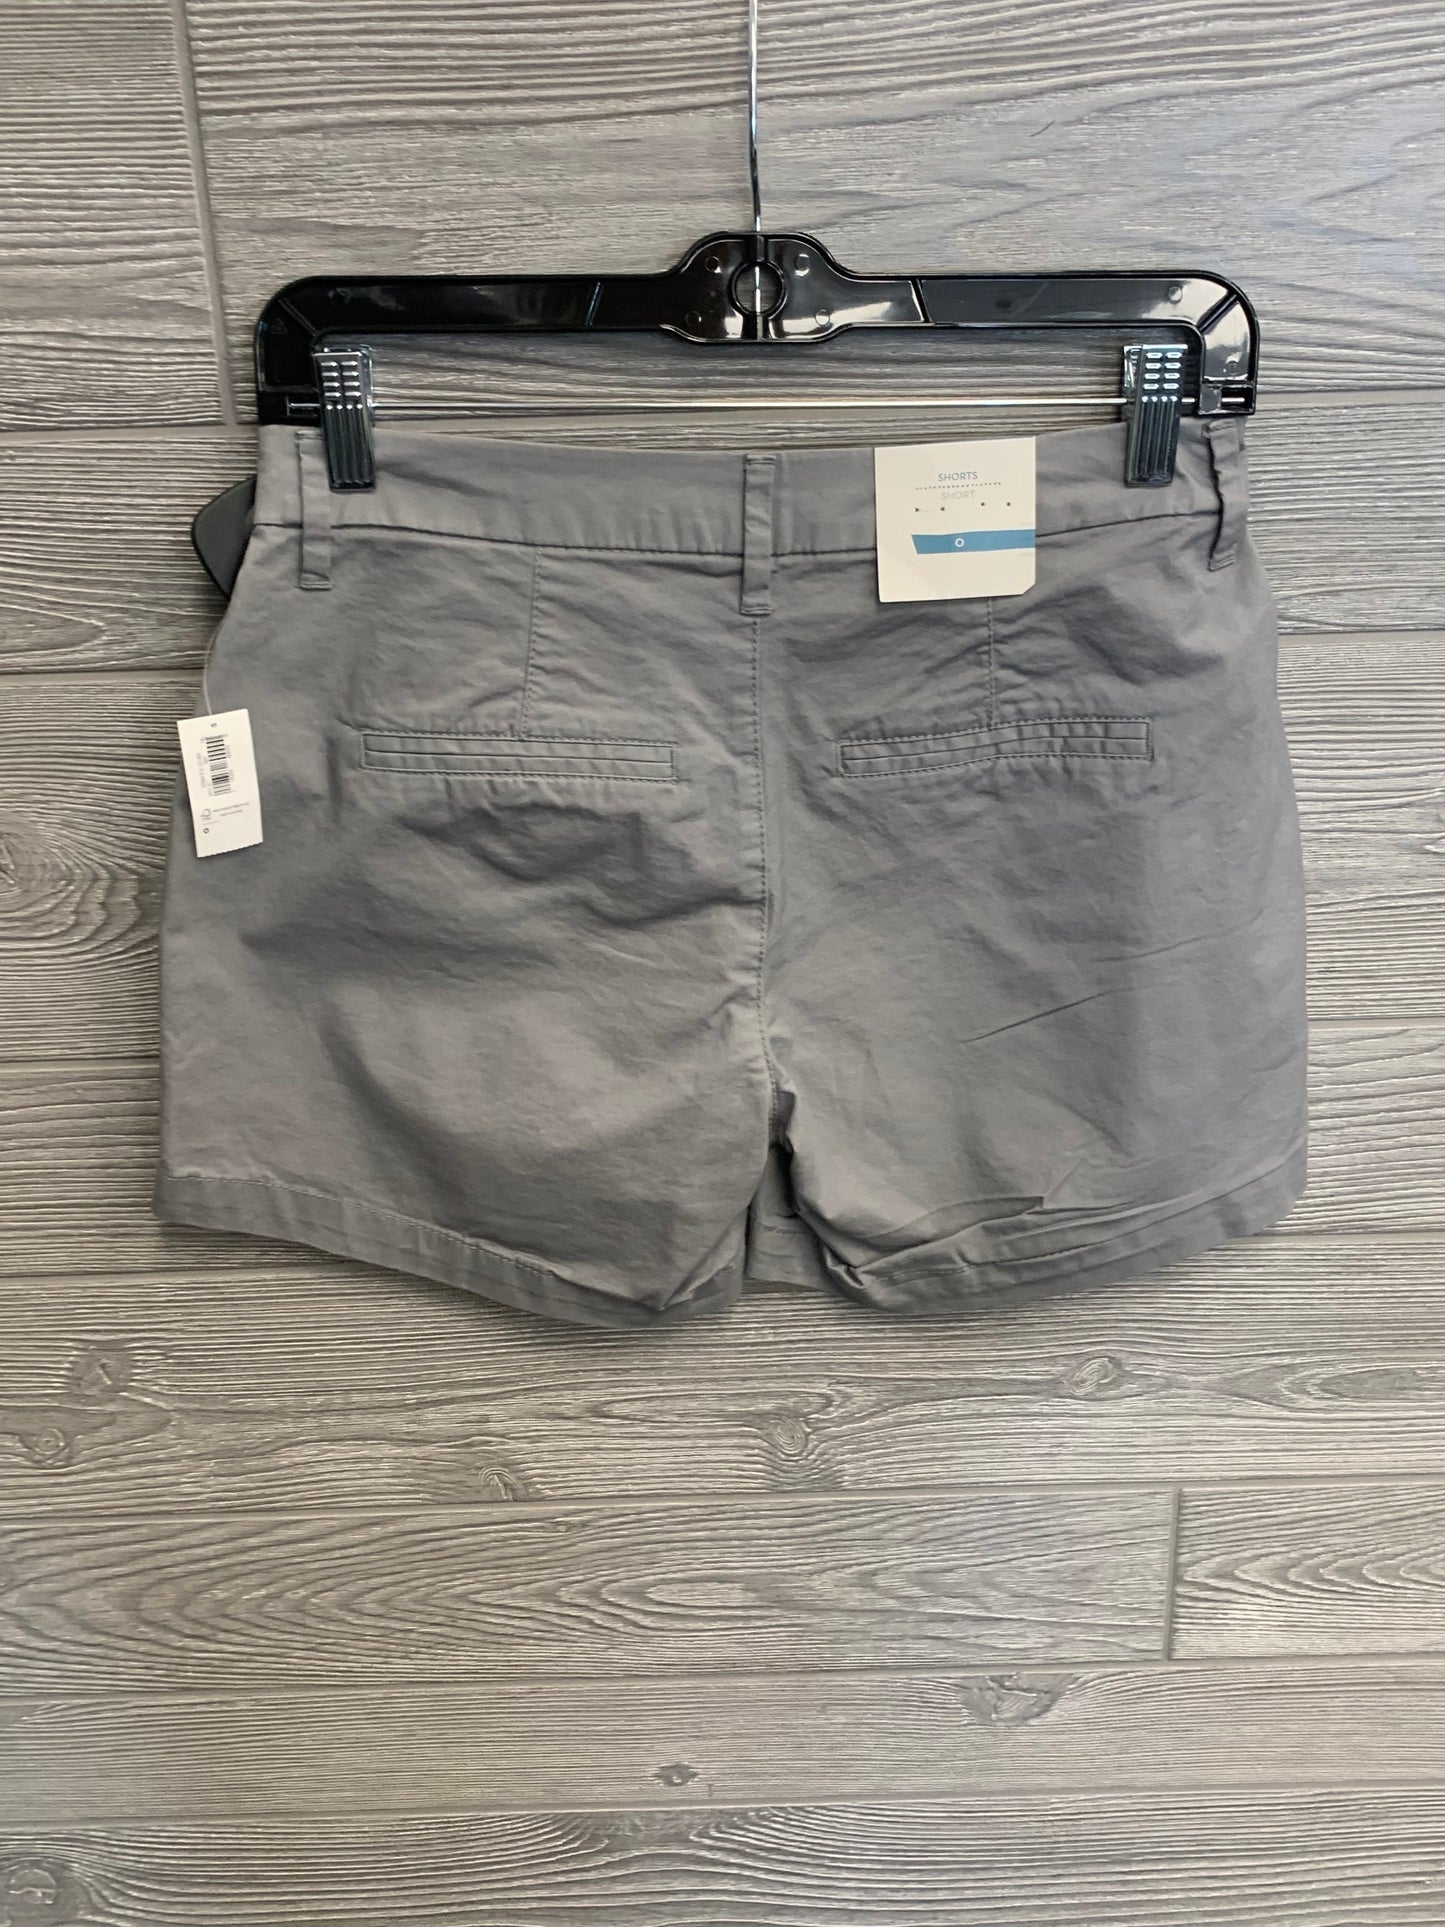 Grey Shorts Old Navy, Size 0